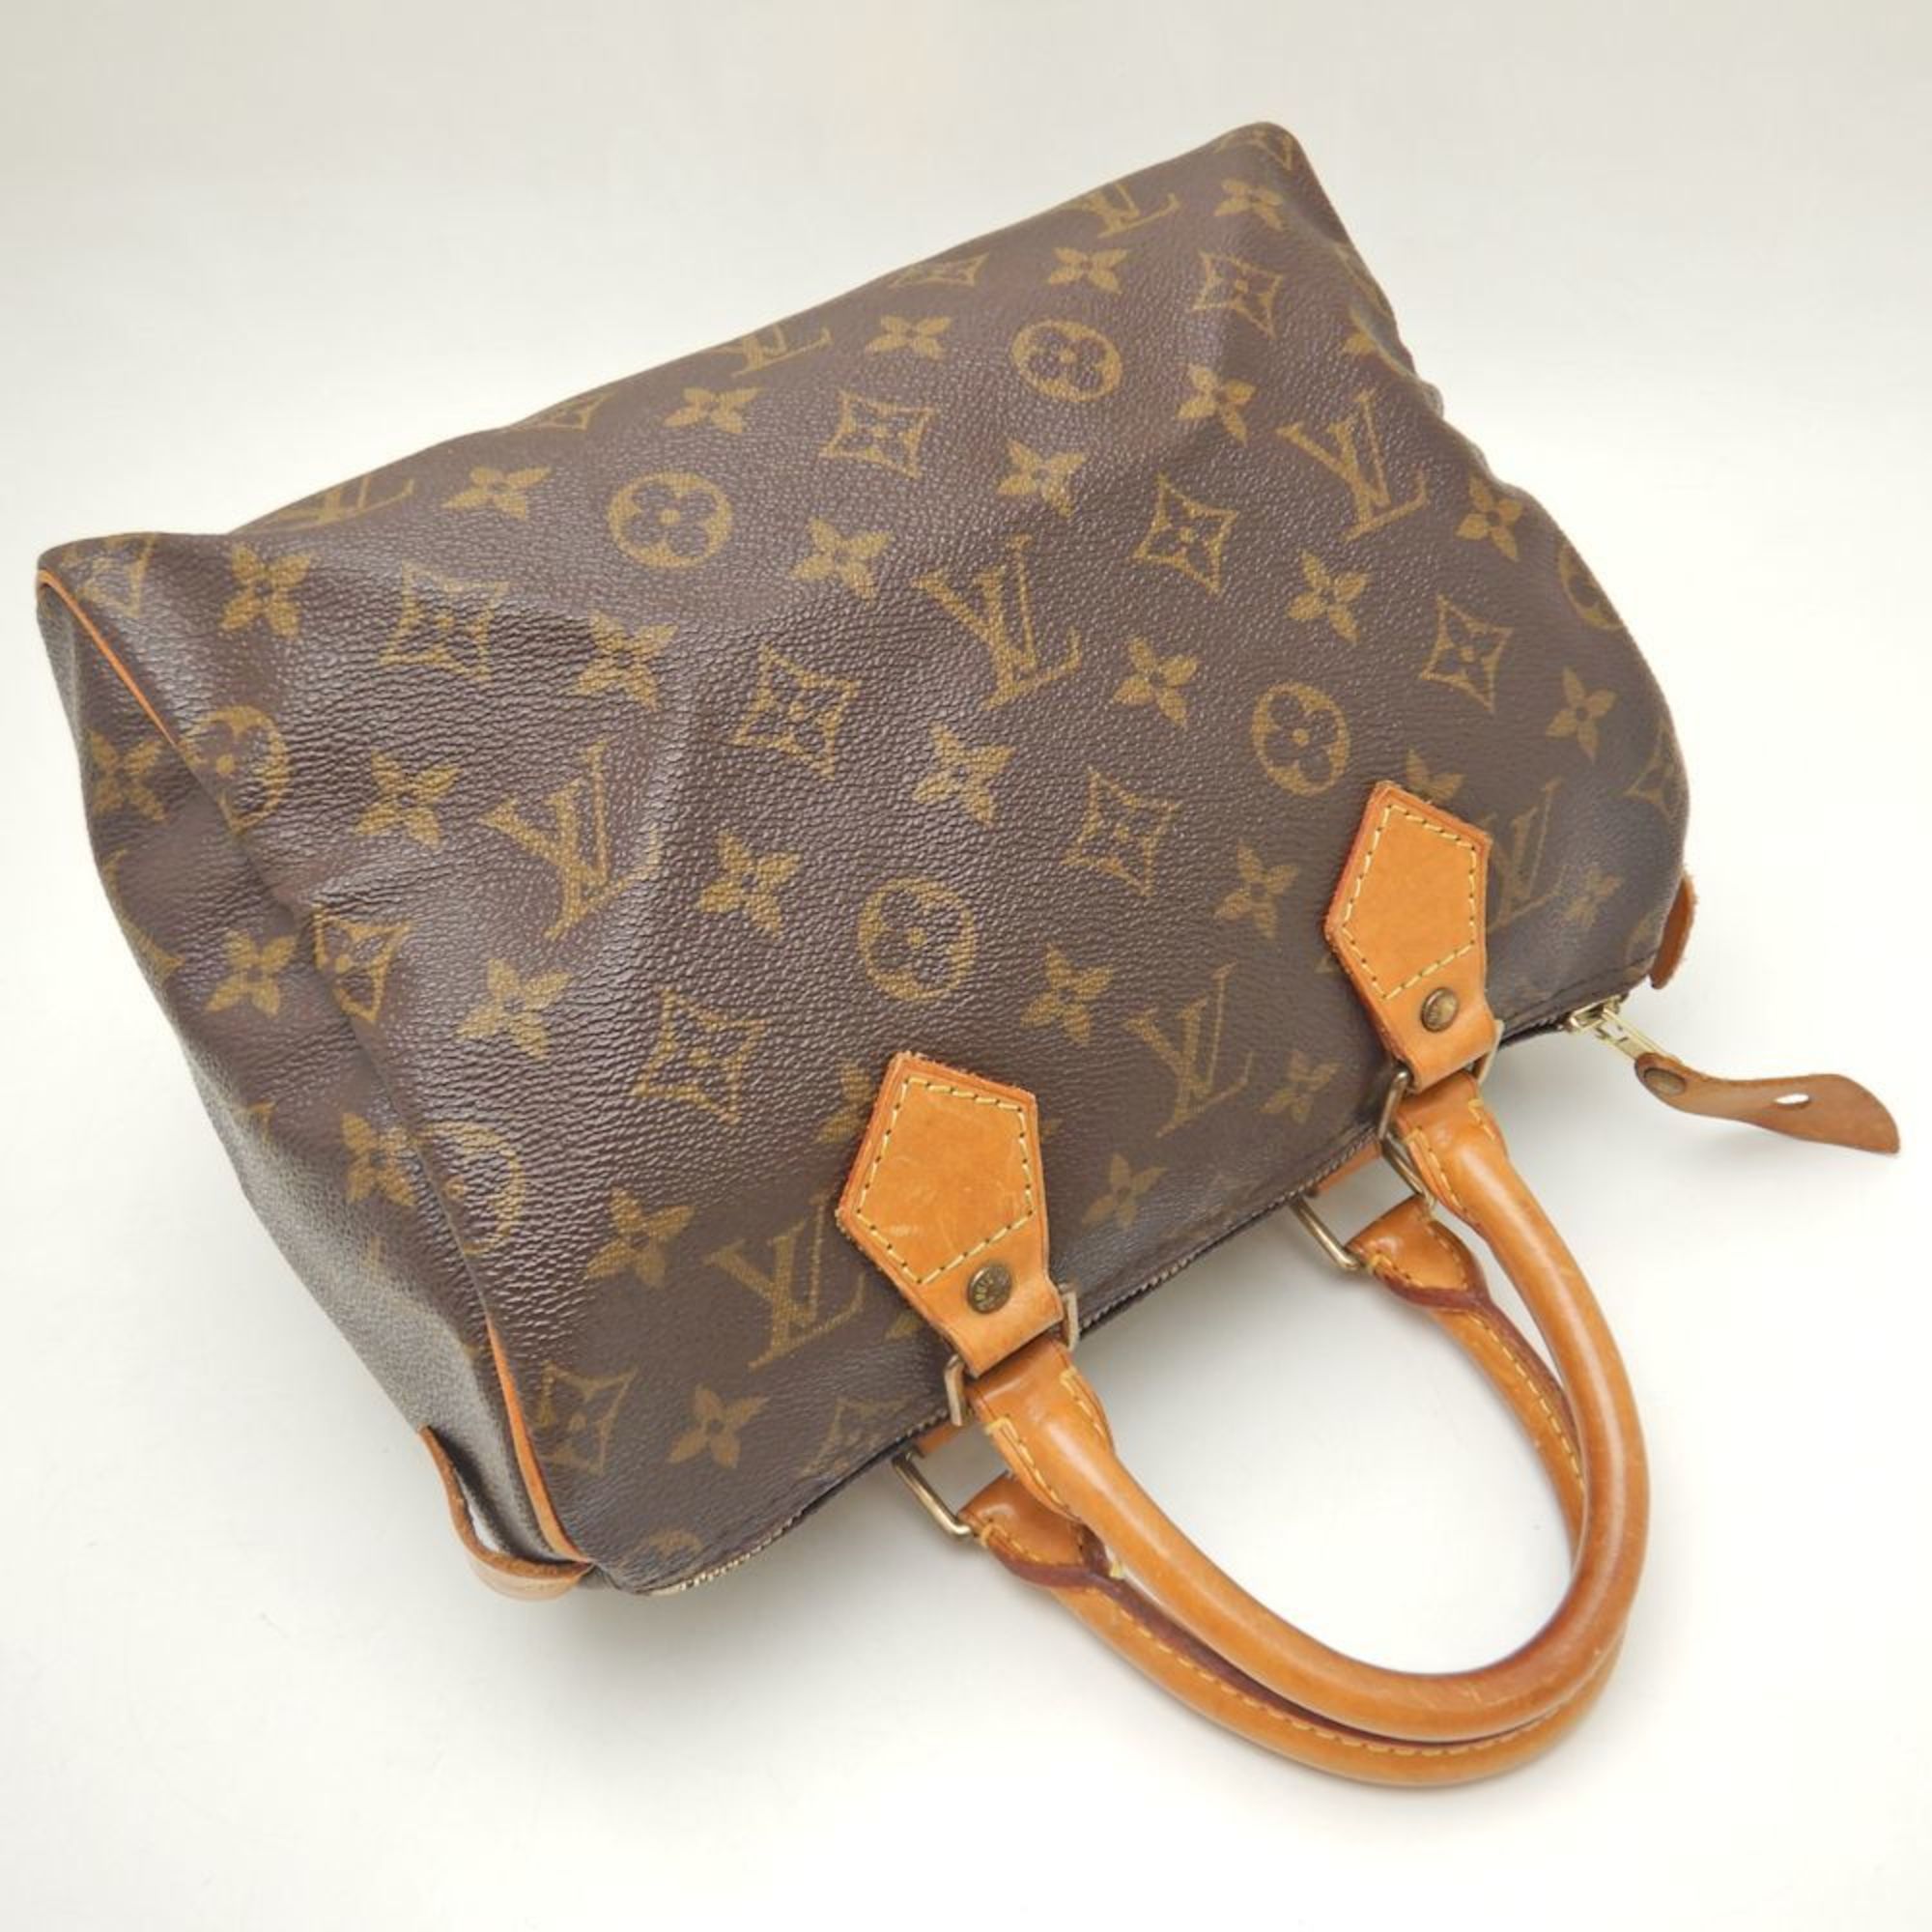 LOUIS VUITTON Louis Vuitton Monogram Speedy 25 M41528 Handbag Brown 251842